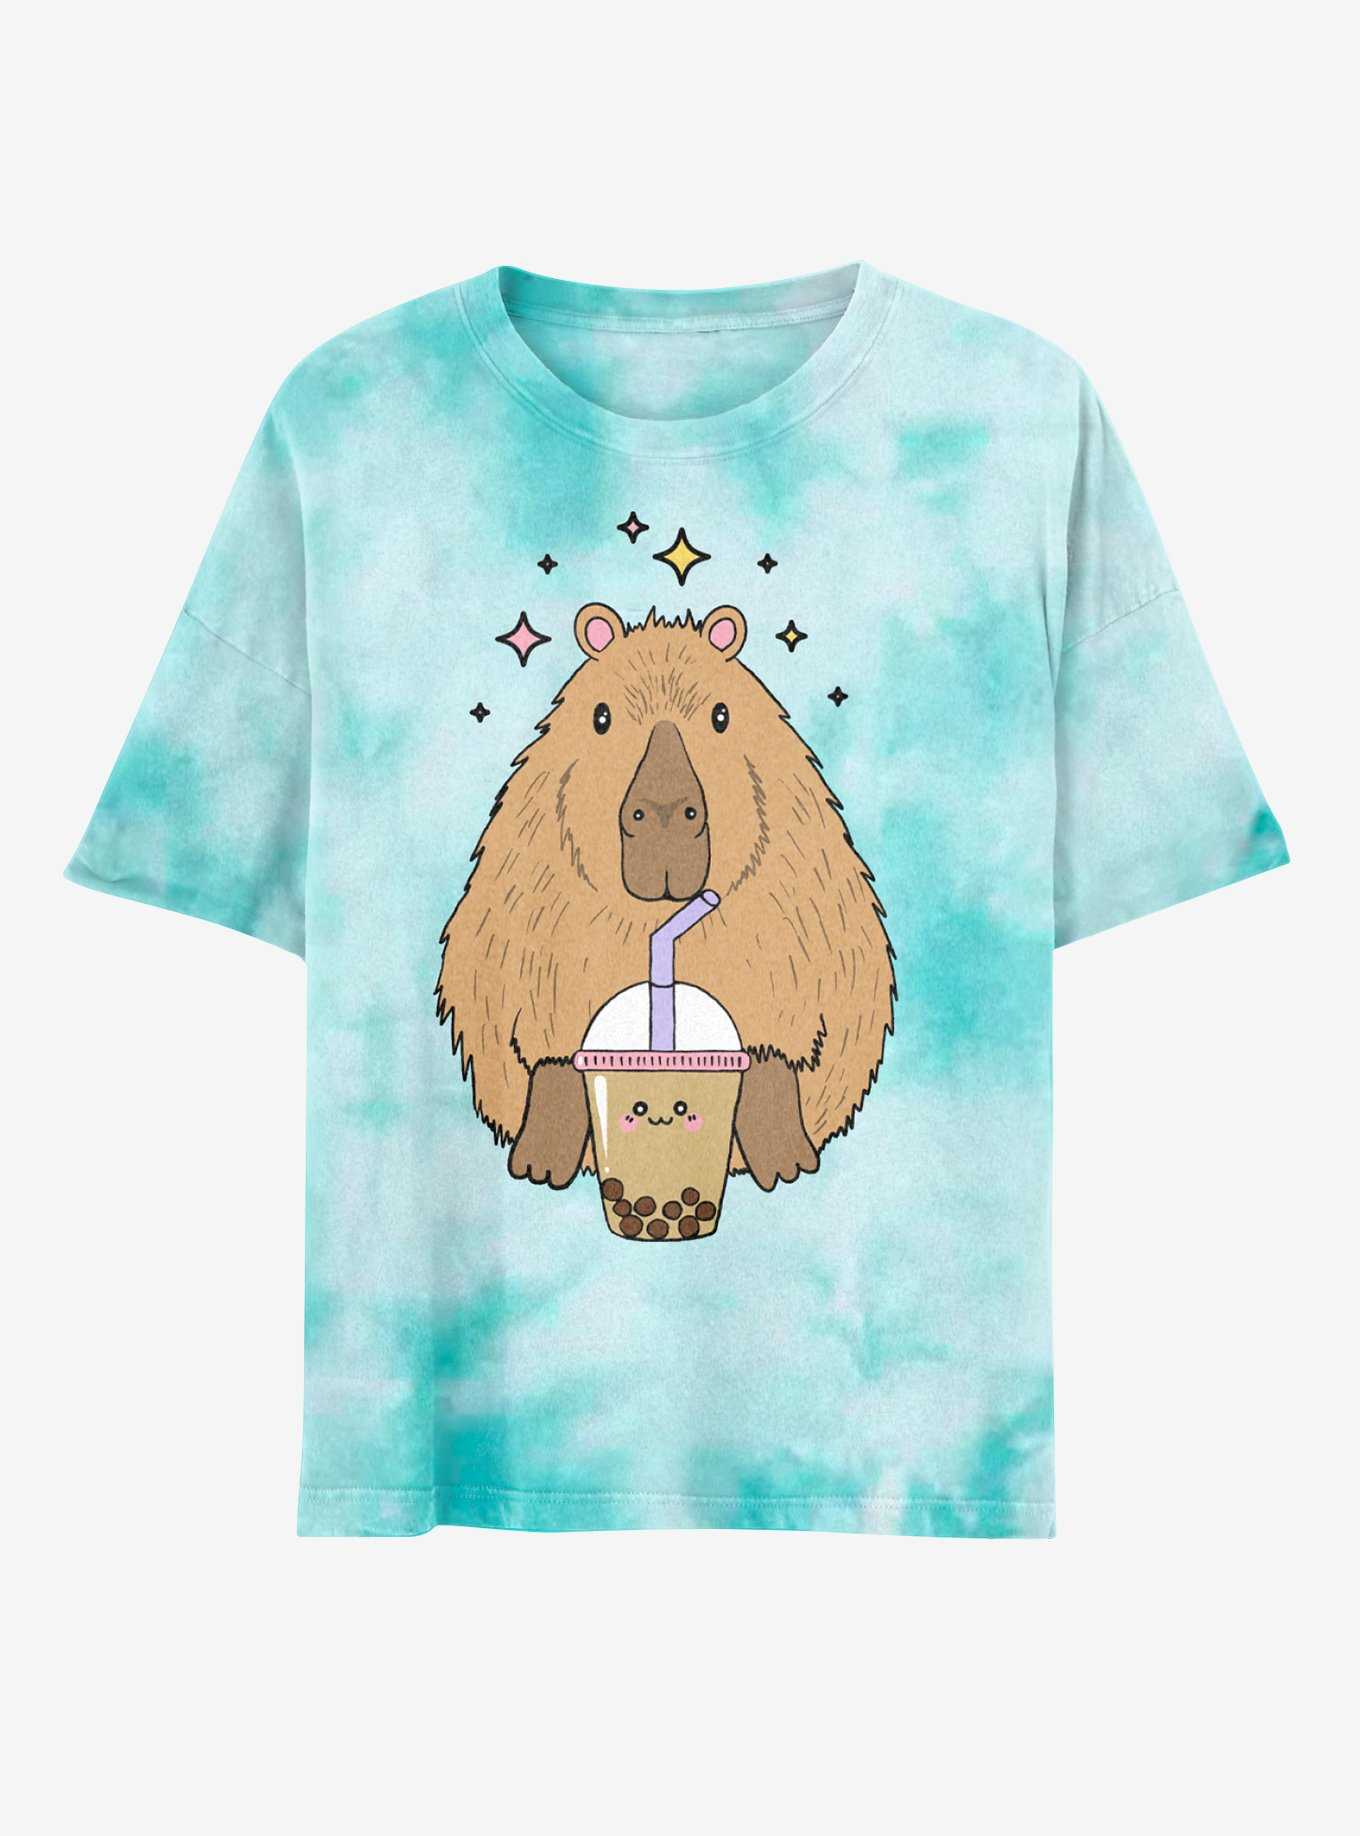 Capybara Boba Tie-Dye Boyfriend Fit Girls T-Shirt, , hi-res